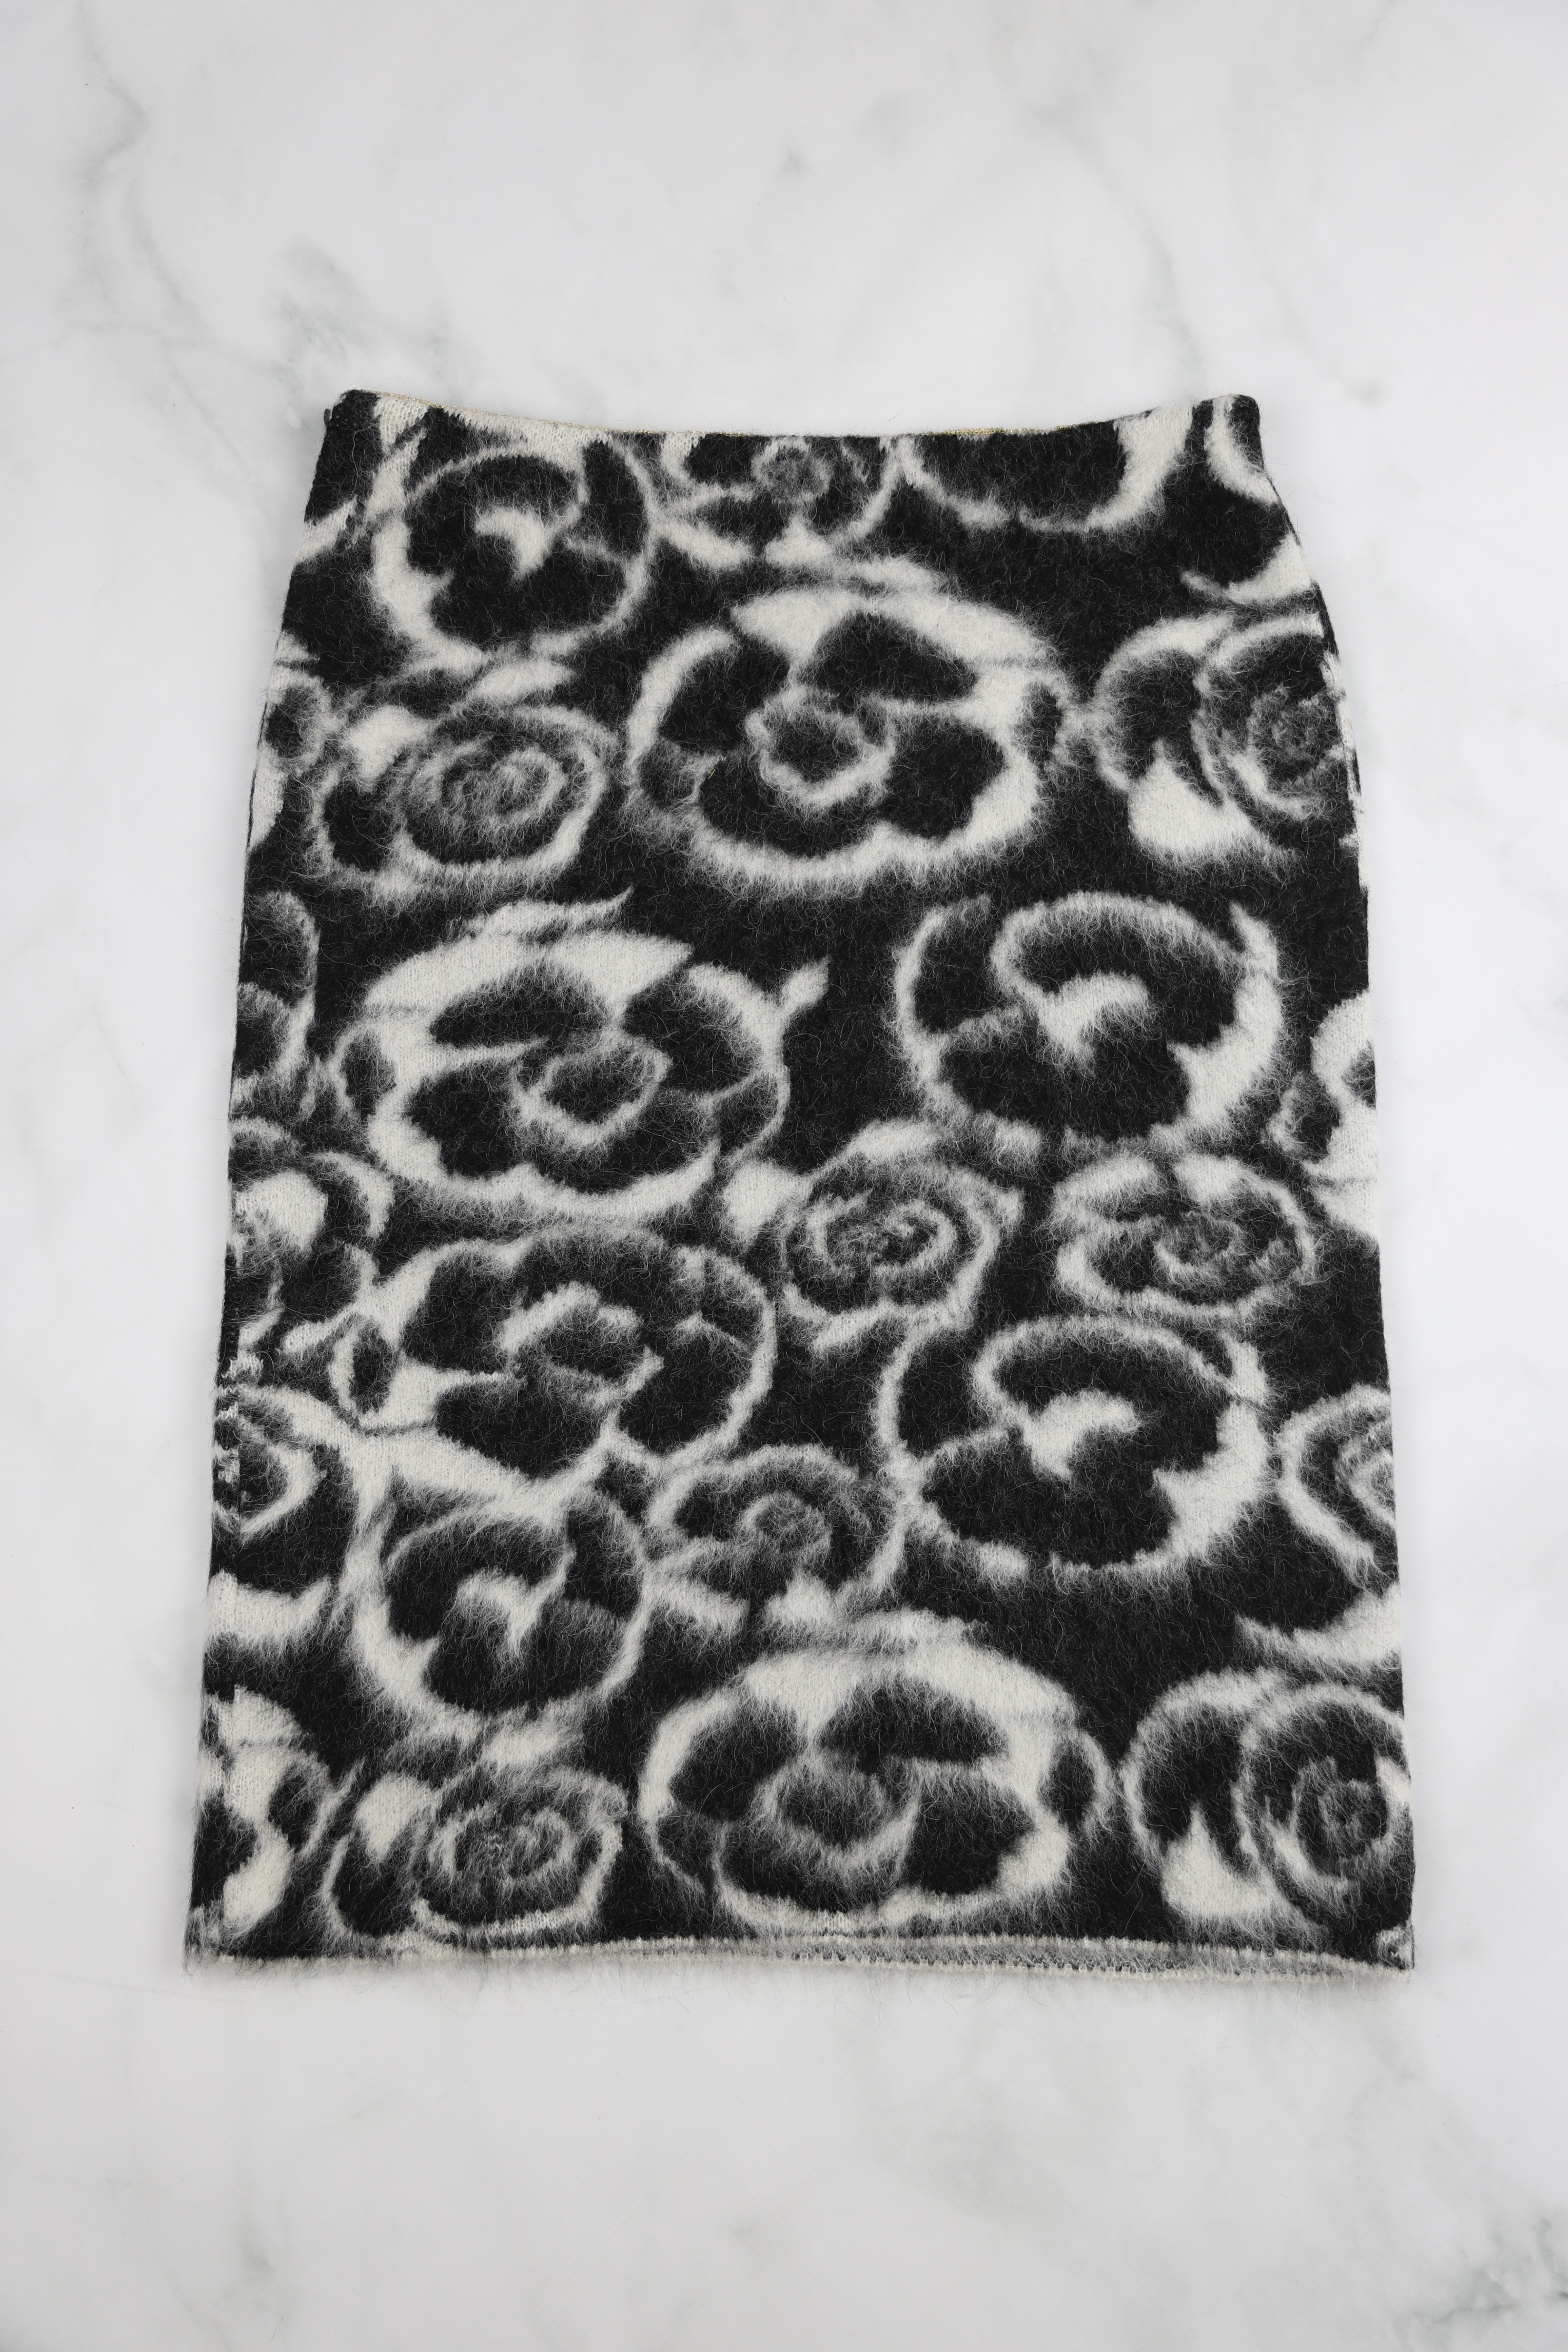 Chanel Skirt Camellia Print, Black and White Knit, New CMA001 - Julia Rose  Boston